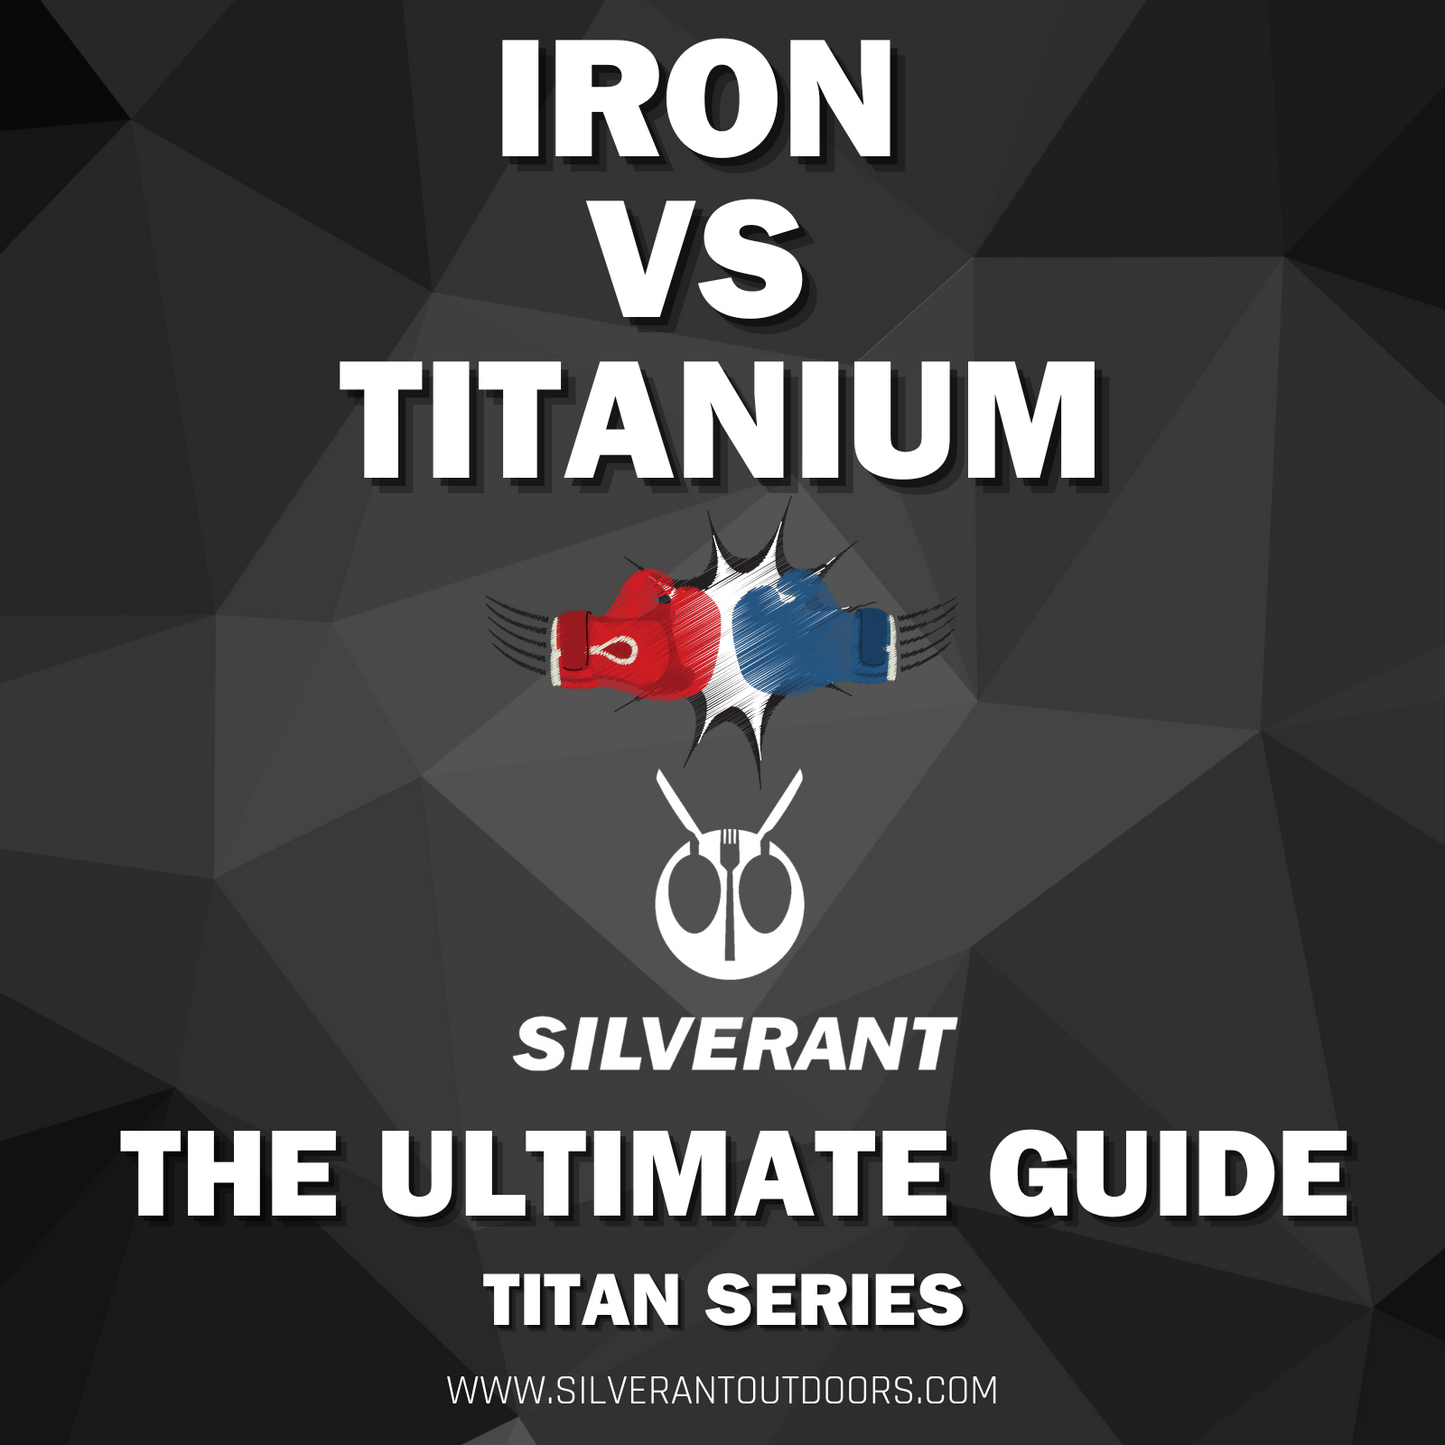 Iron VS Titanium - The Ultimate Guide